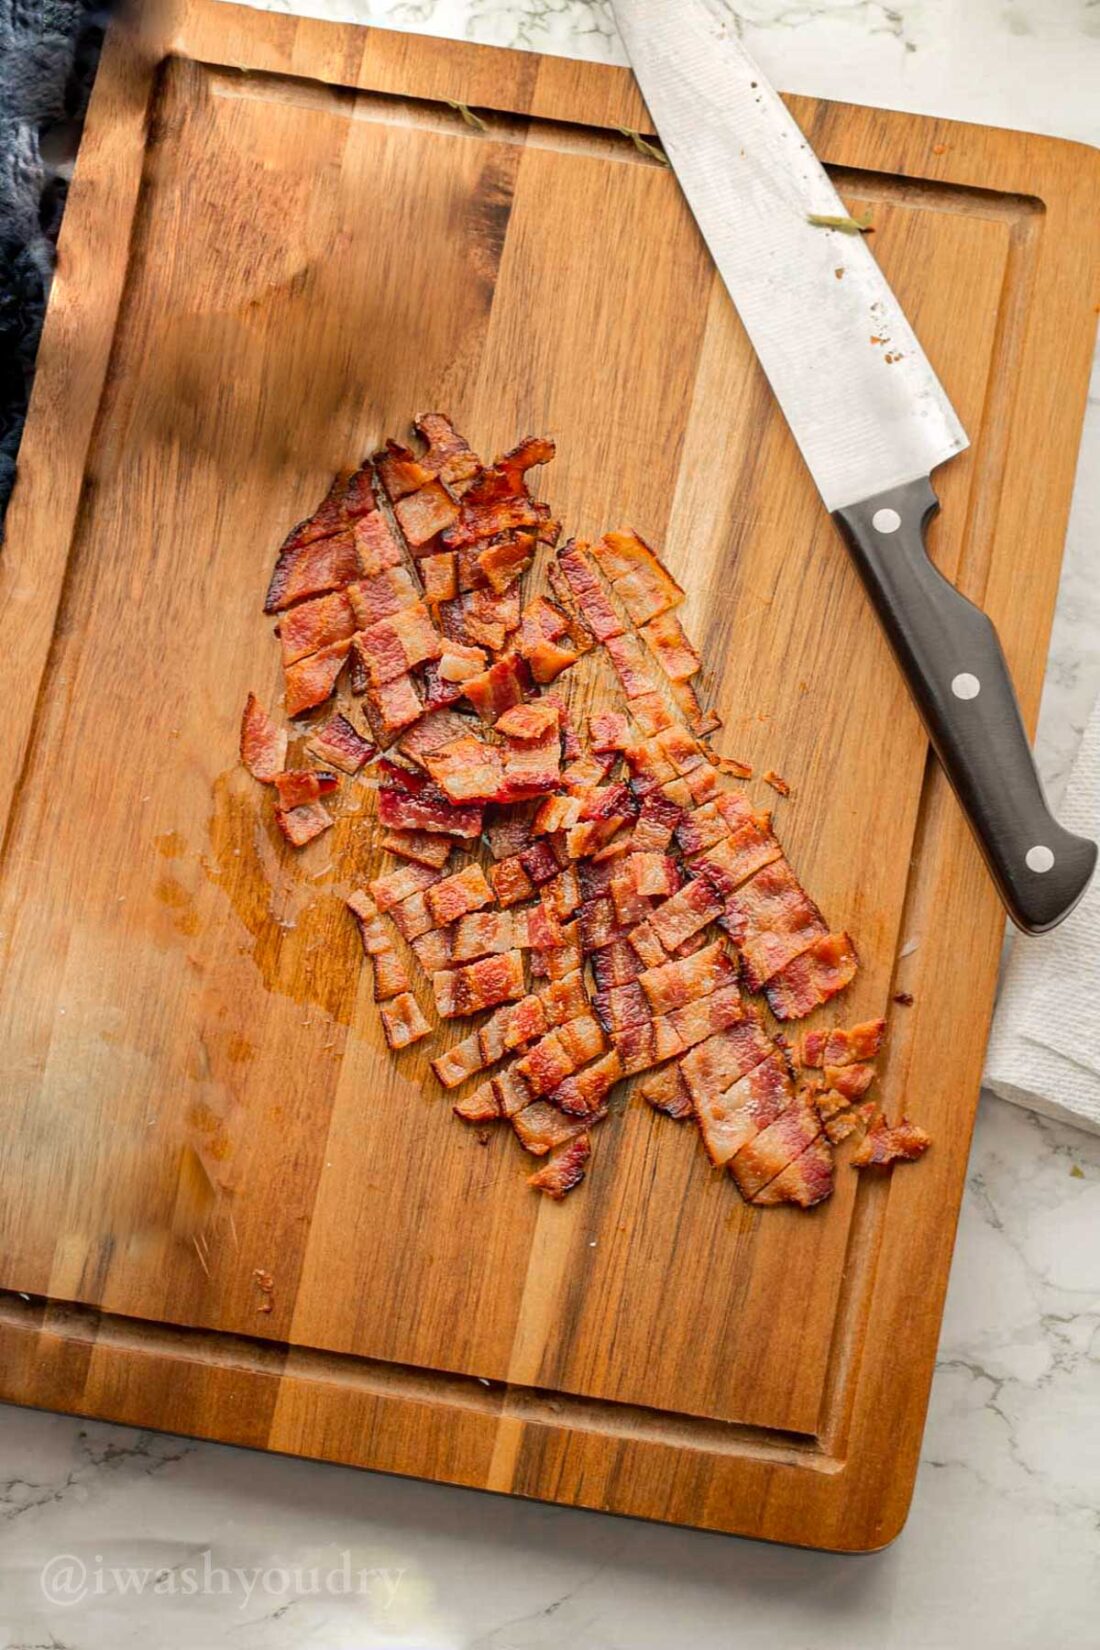 Diced Bacon on a wood cutting board.